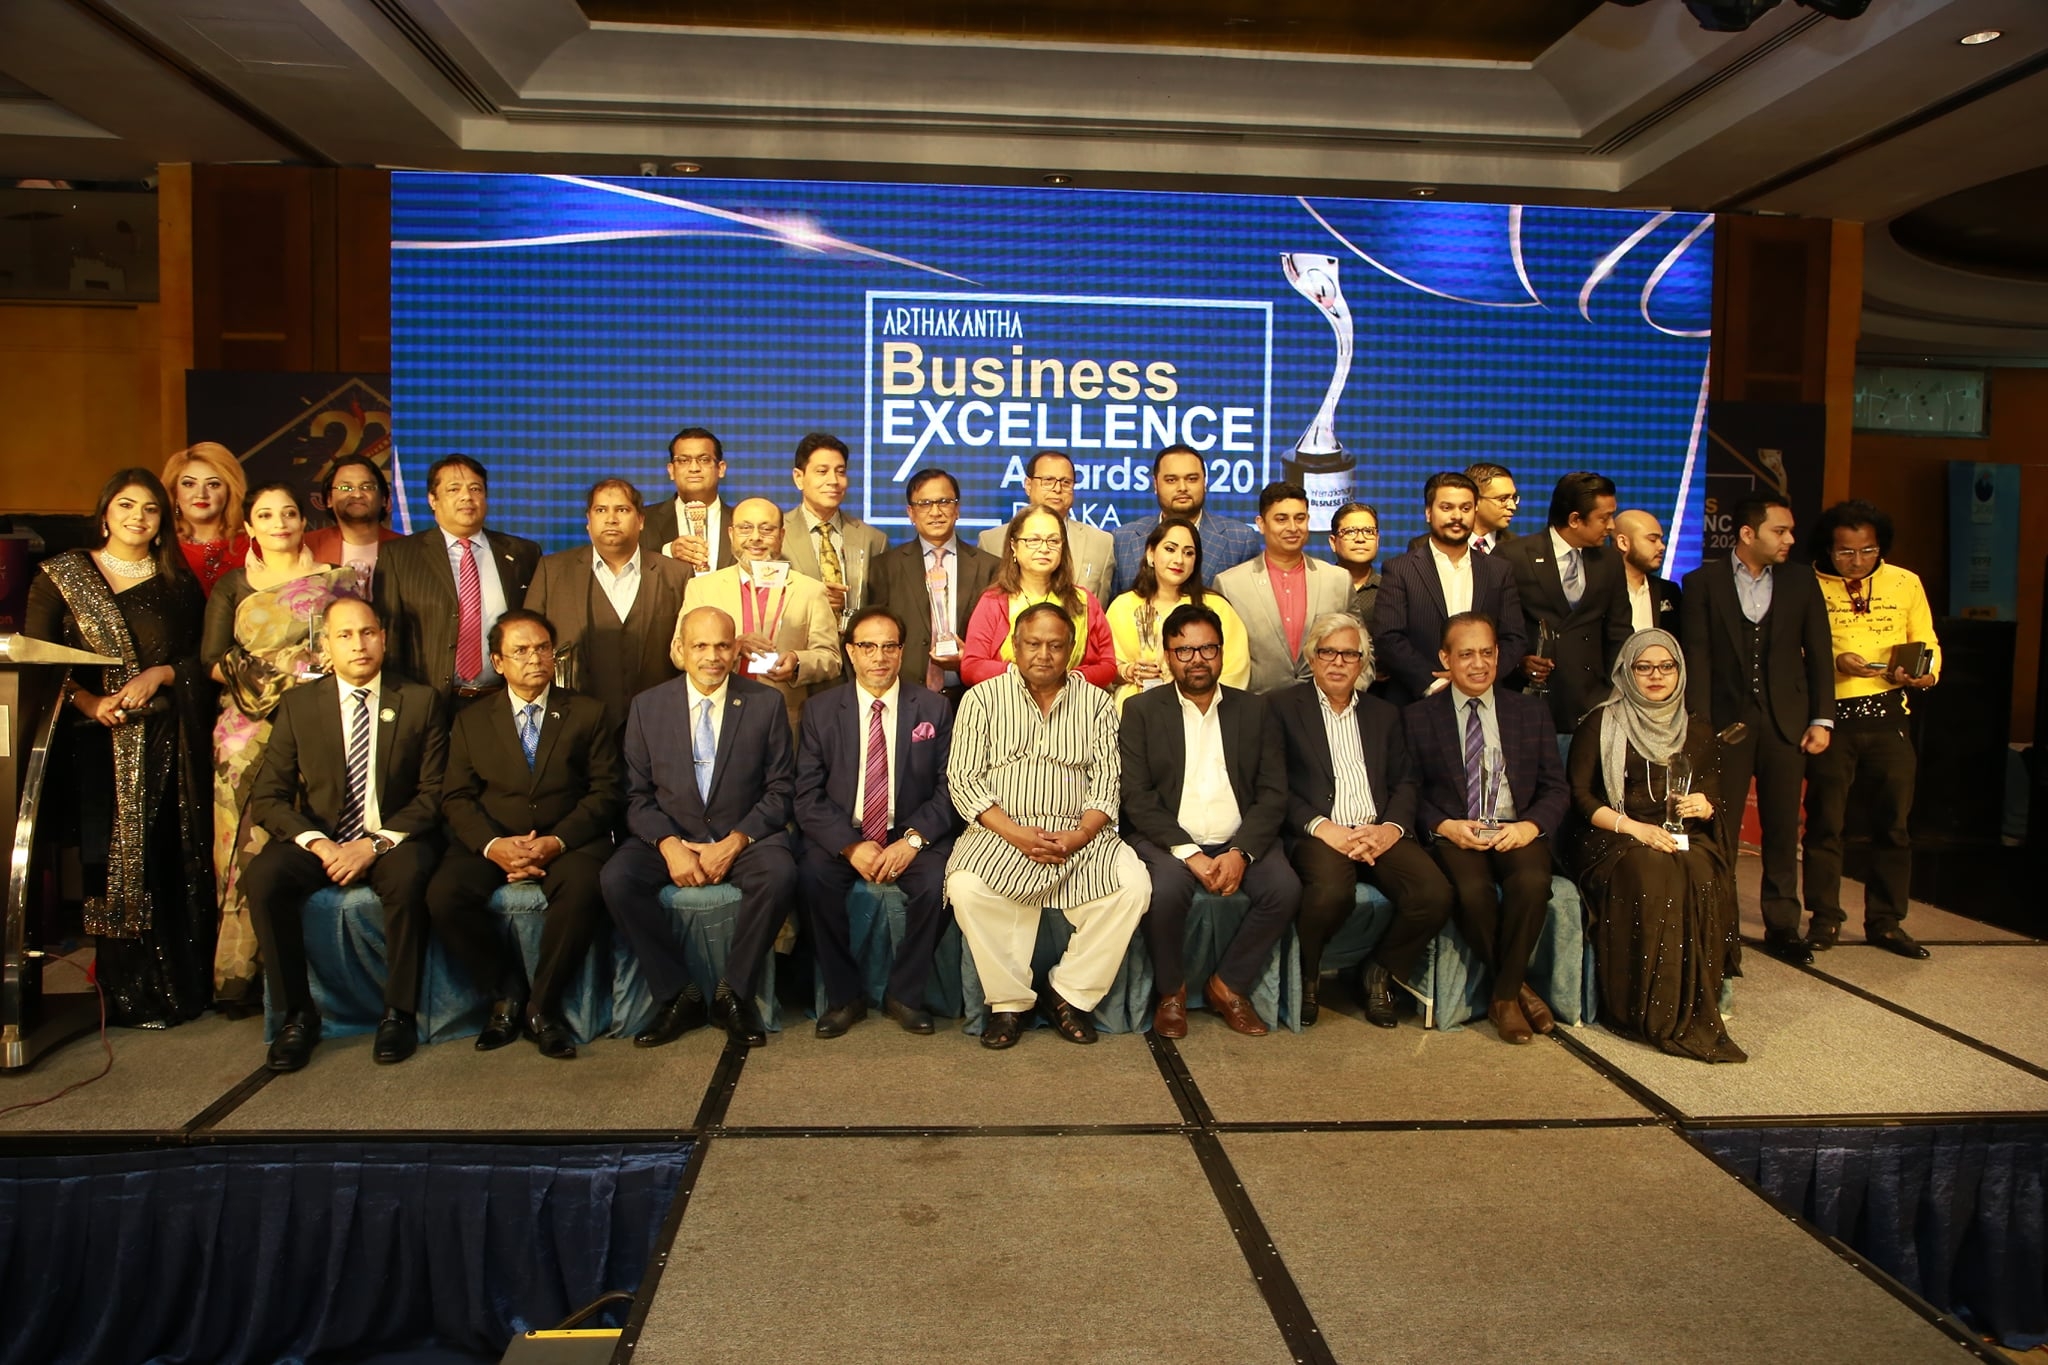 27 entrepreneurs get ‘Arthakantha Business Excellence Award’ 